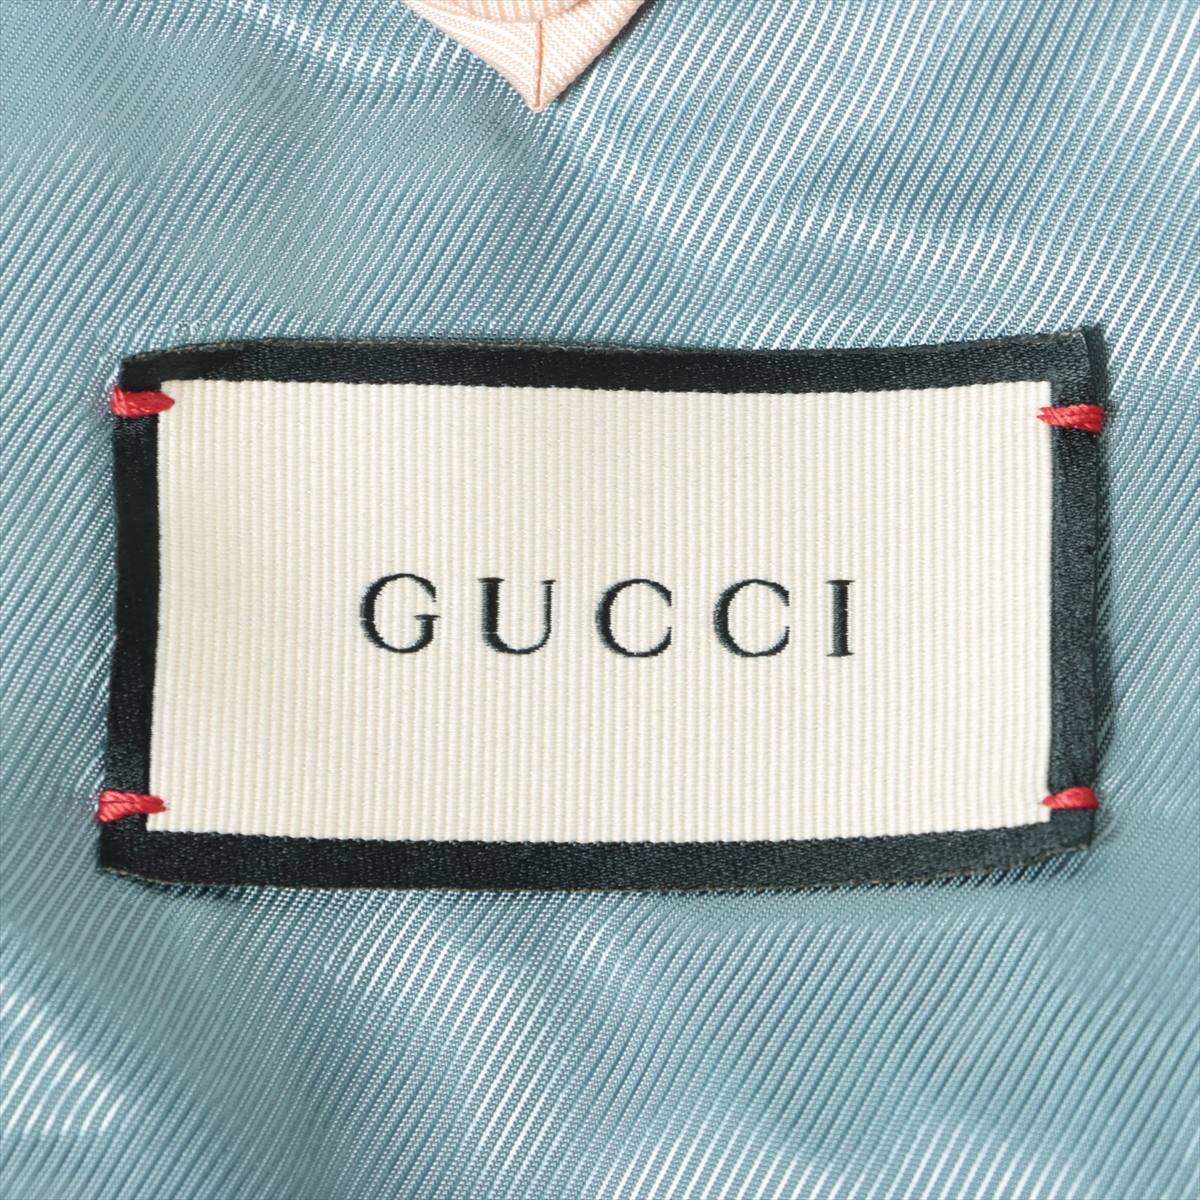 Gucci 18 years Cotton & wool Tailored jacket 44 Men's Navy blue  521888 Monaco Bee Stripe